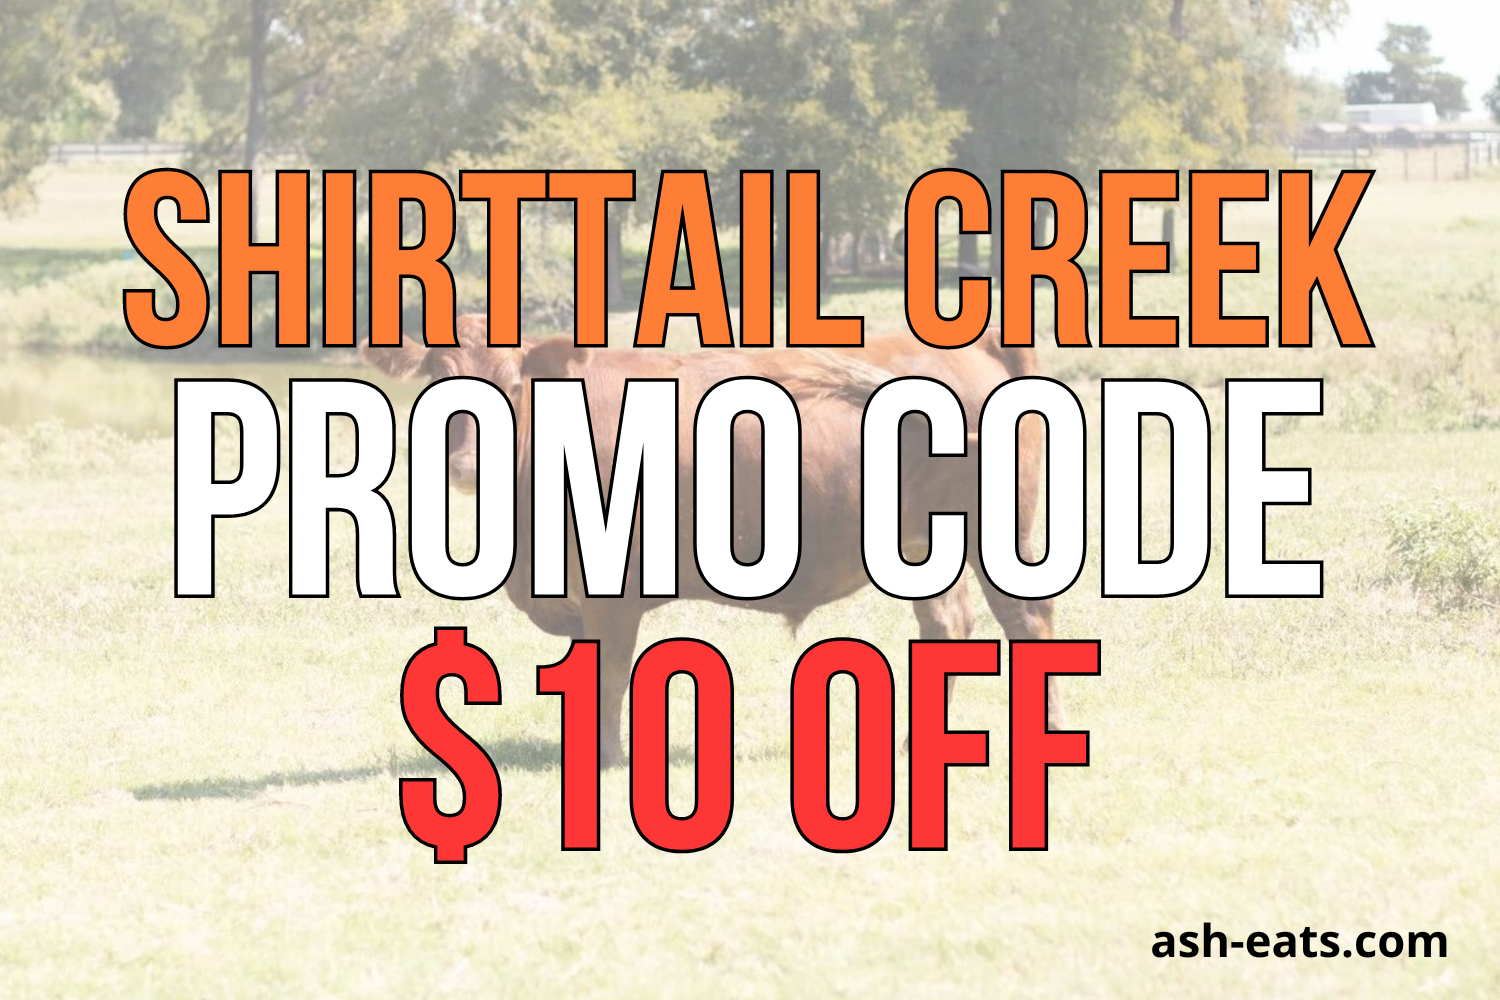 shirttail creek promo code